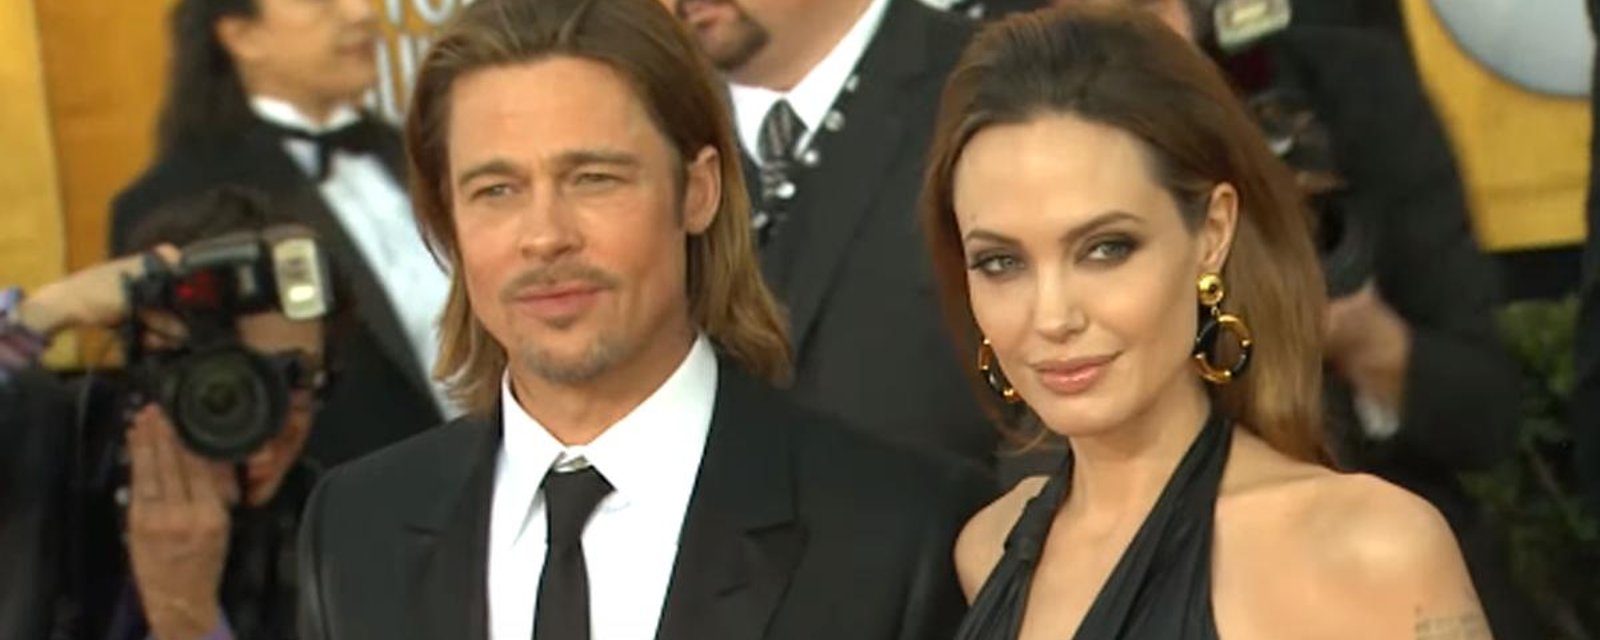 Angelina Jolie a demandé le divorce de Brad Pitt